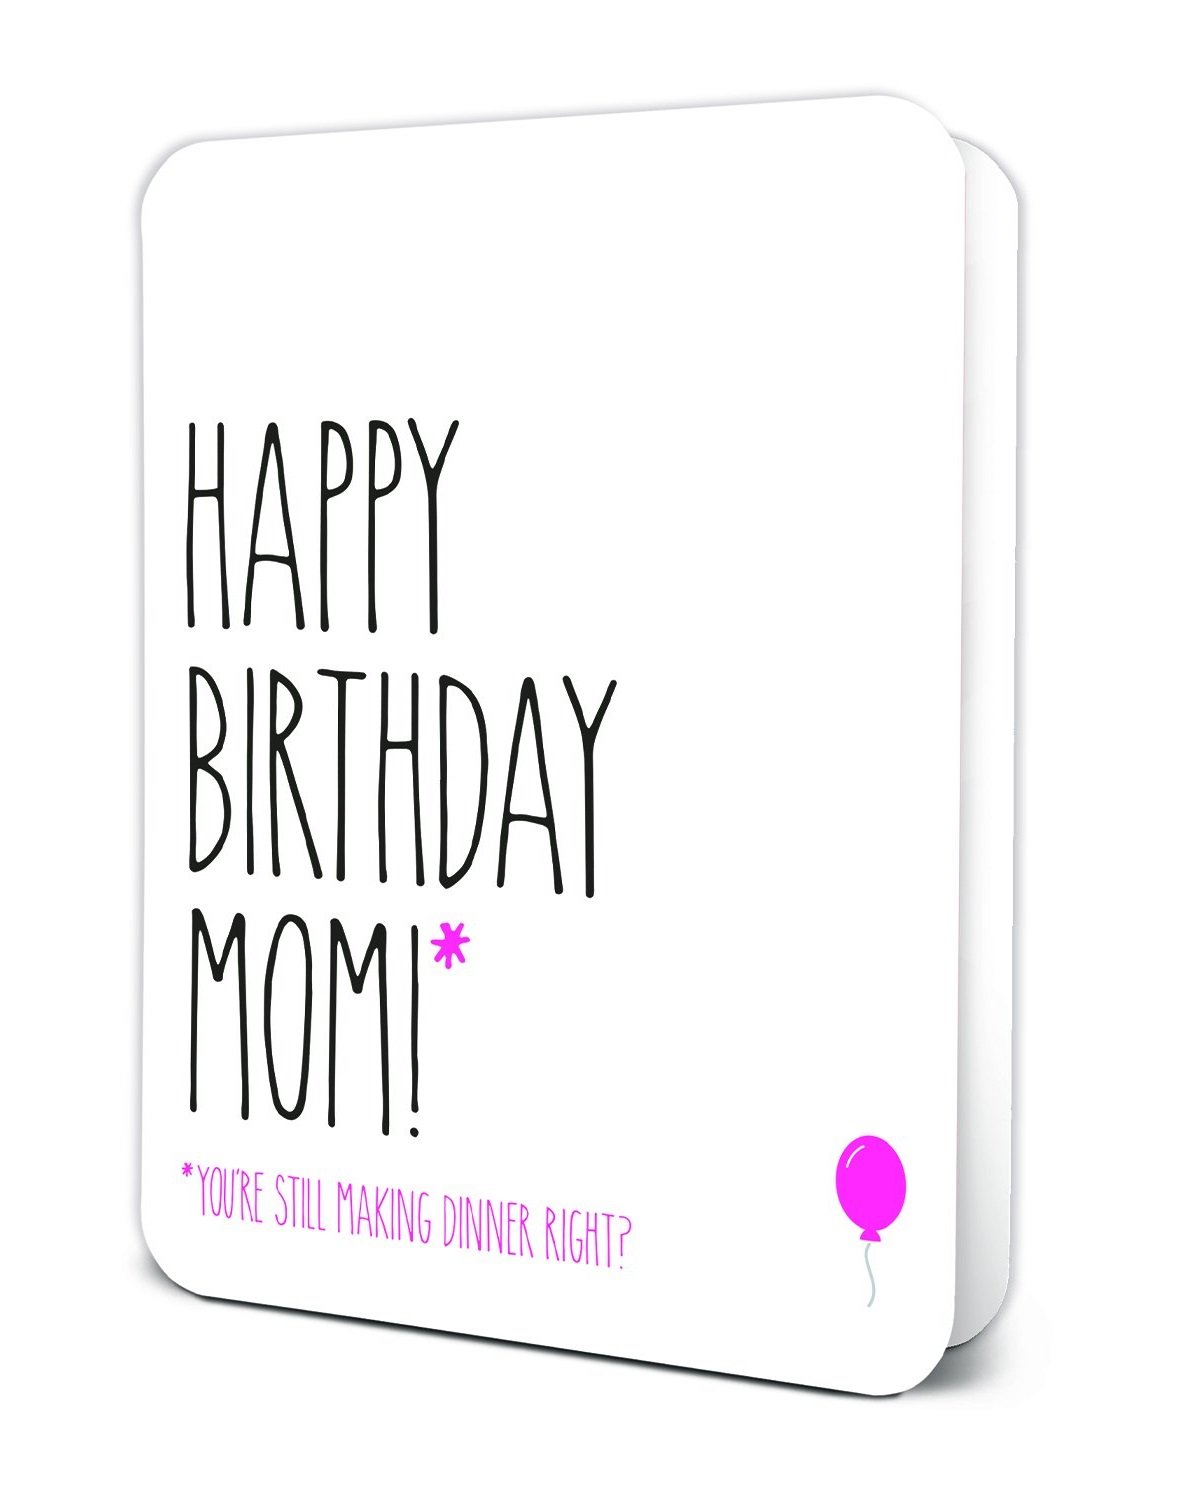 Happy Birthday Mom - Greeting Card Greeting Card Orange Circle Studio